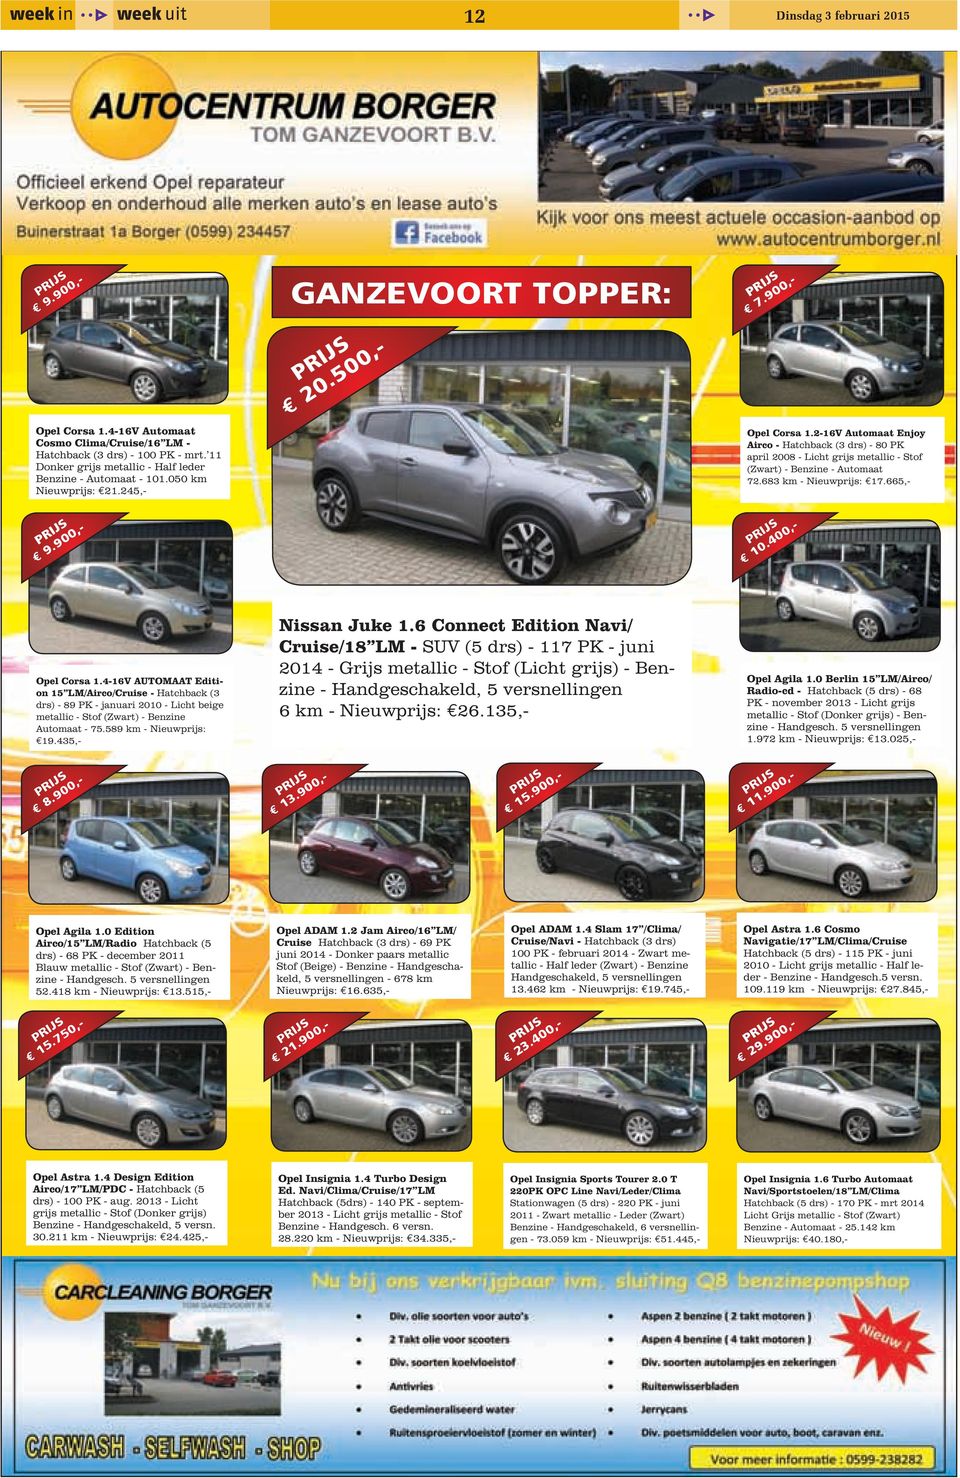 2-16V Automaat Enjoy Airco - Hatchback (3 drs) - 80 PK april 2008 - Licht grijs metallic - Stof (Zwart) - Benzine - Automaat 72.683 km - Nieuwprijs: 17.665,- prijs 9.900,- prijs 10.400,- Opel Corsa 1.